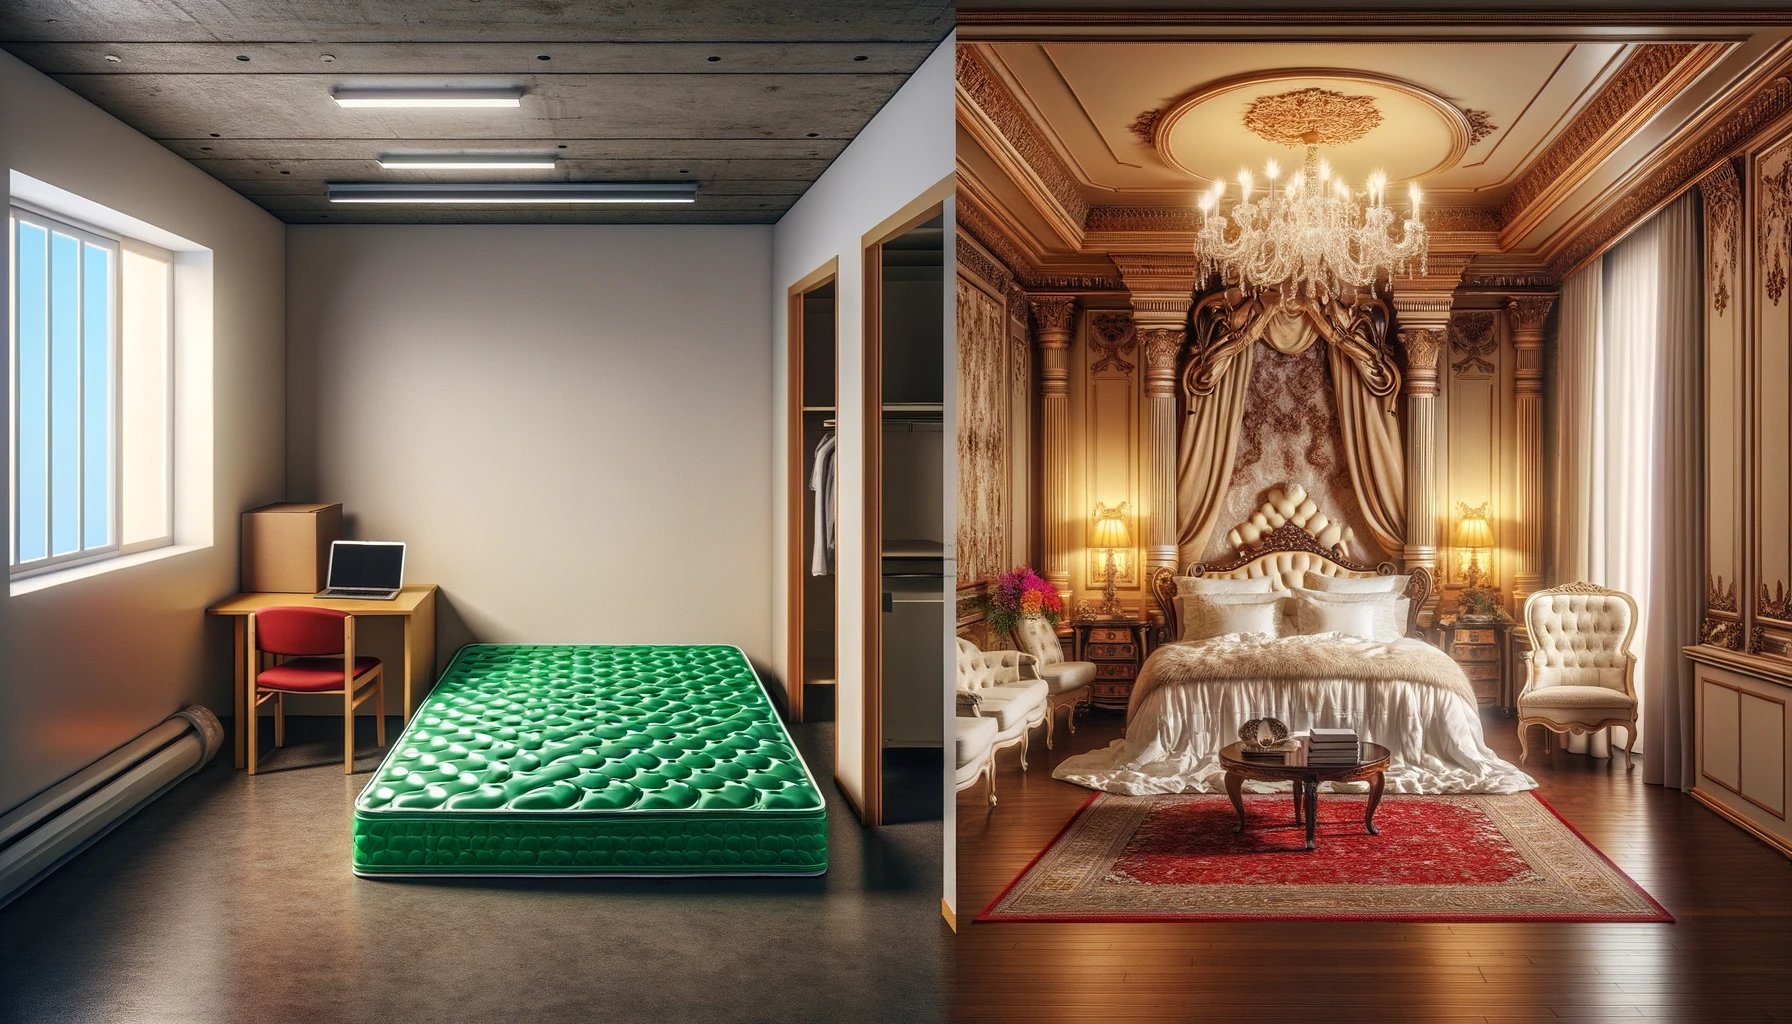 Sleep Study on Dormi DreamLuxe Elite Bed vs. College Dorm Mattresses - Dormi